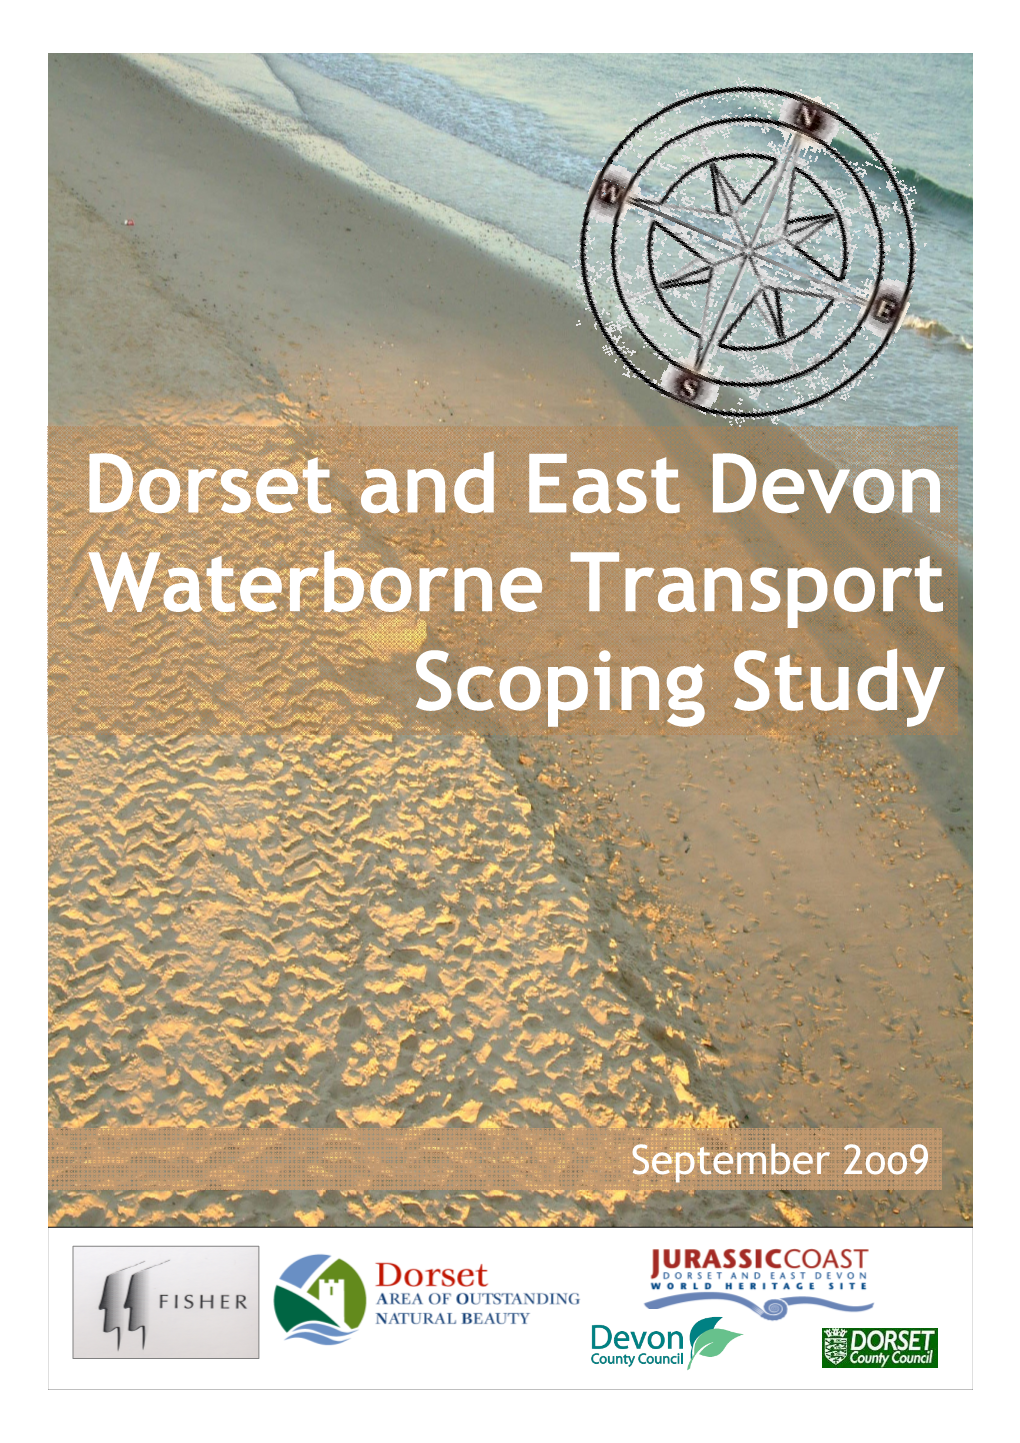 Dorset and East Devon Waterborne Transport Scoping Study